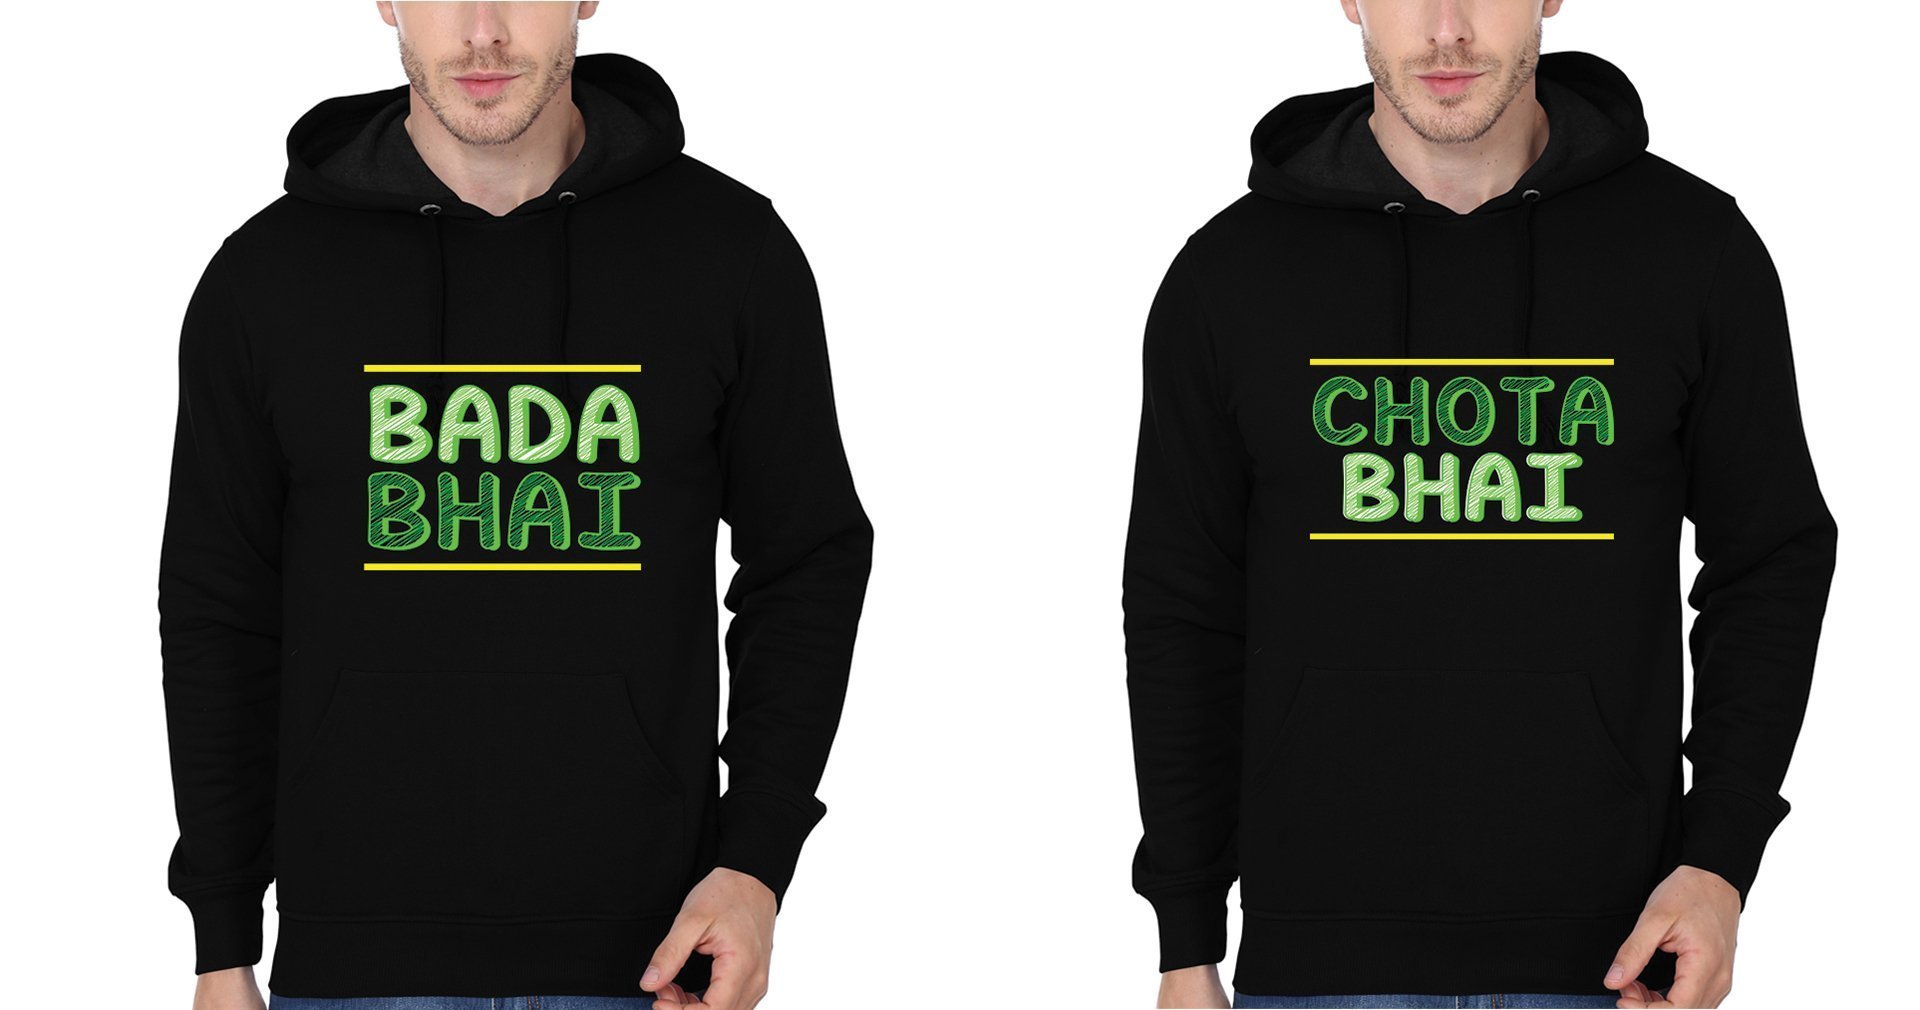 Bada Bhai Chota Bhai Brother-Brother Hoodies-FunkyTees - Funky Tees Club